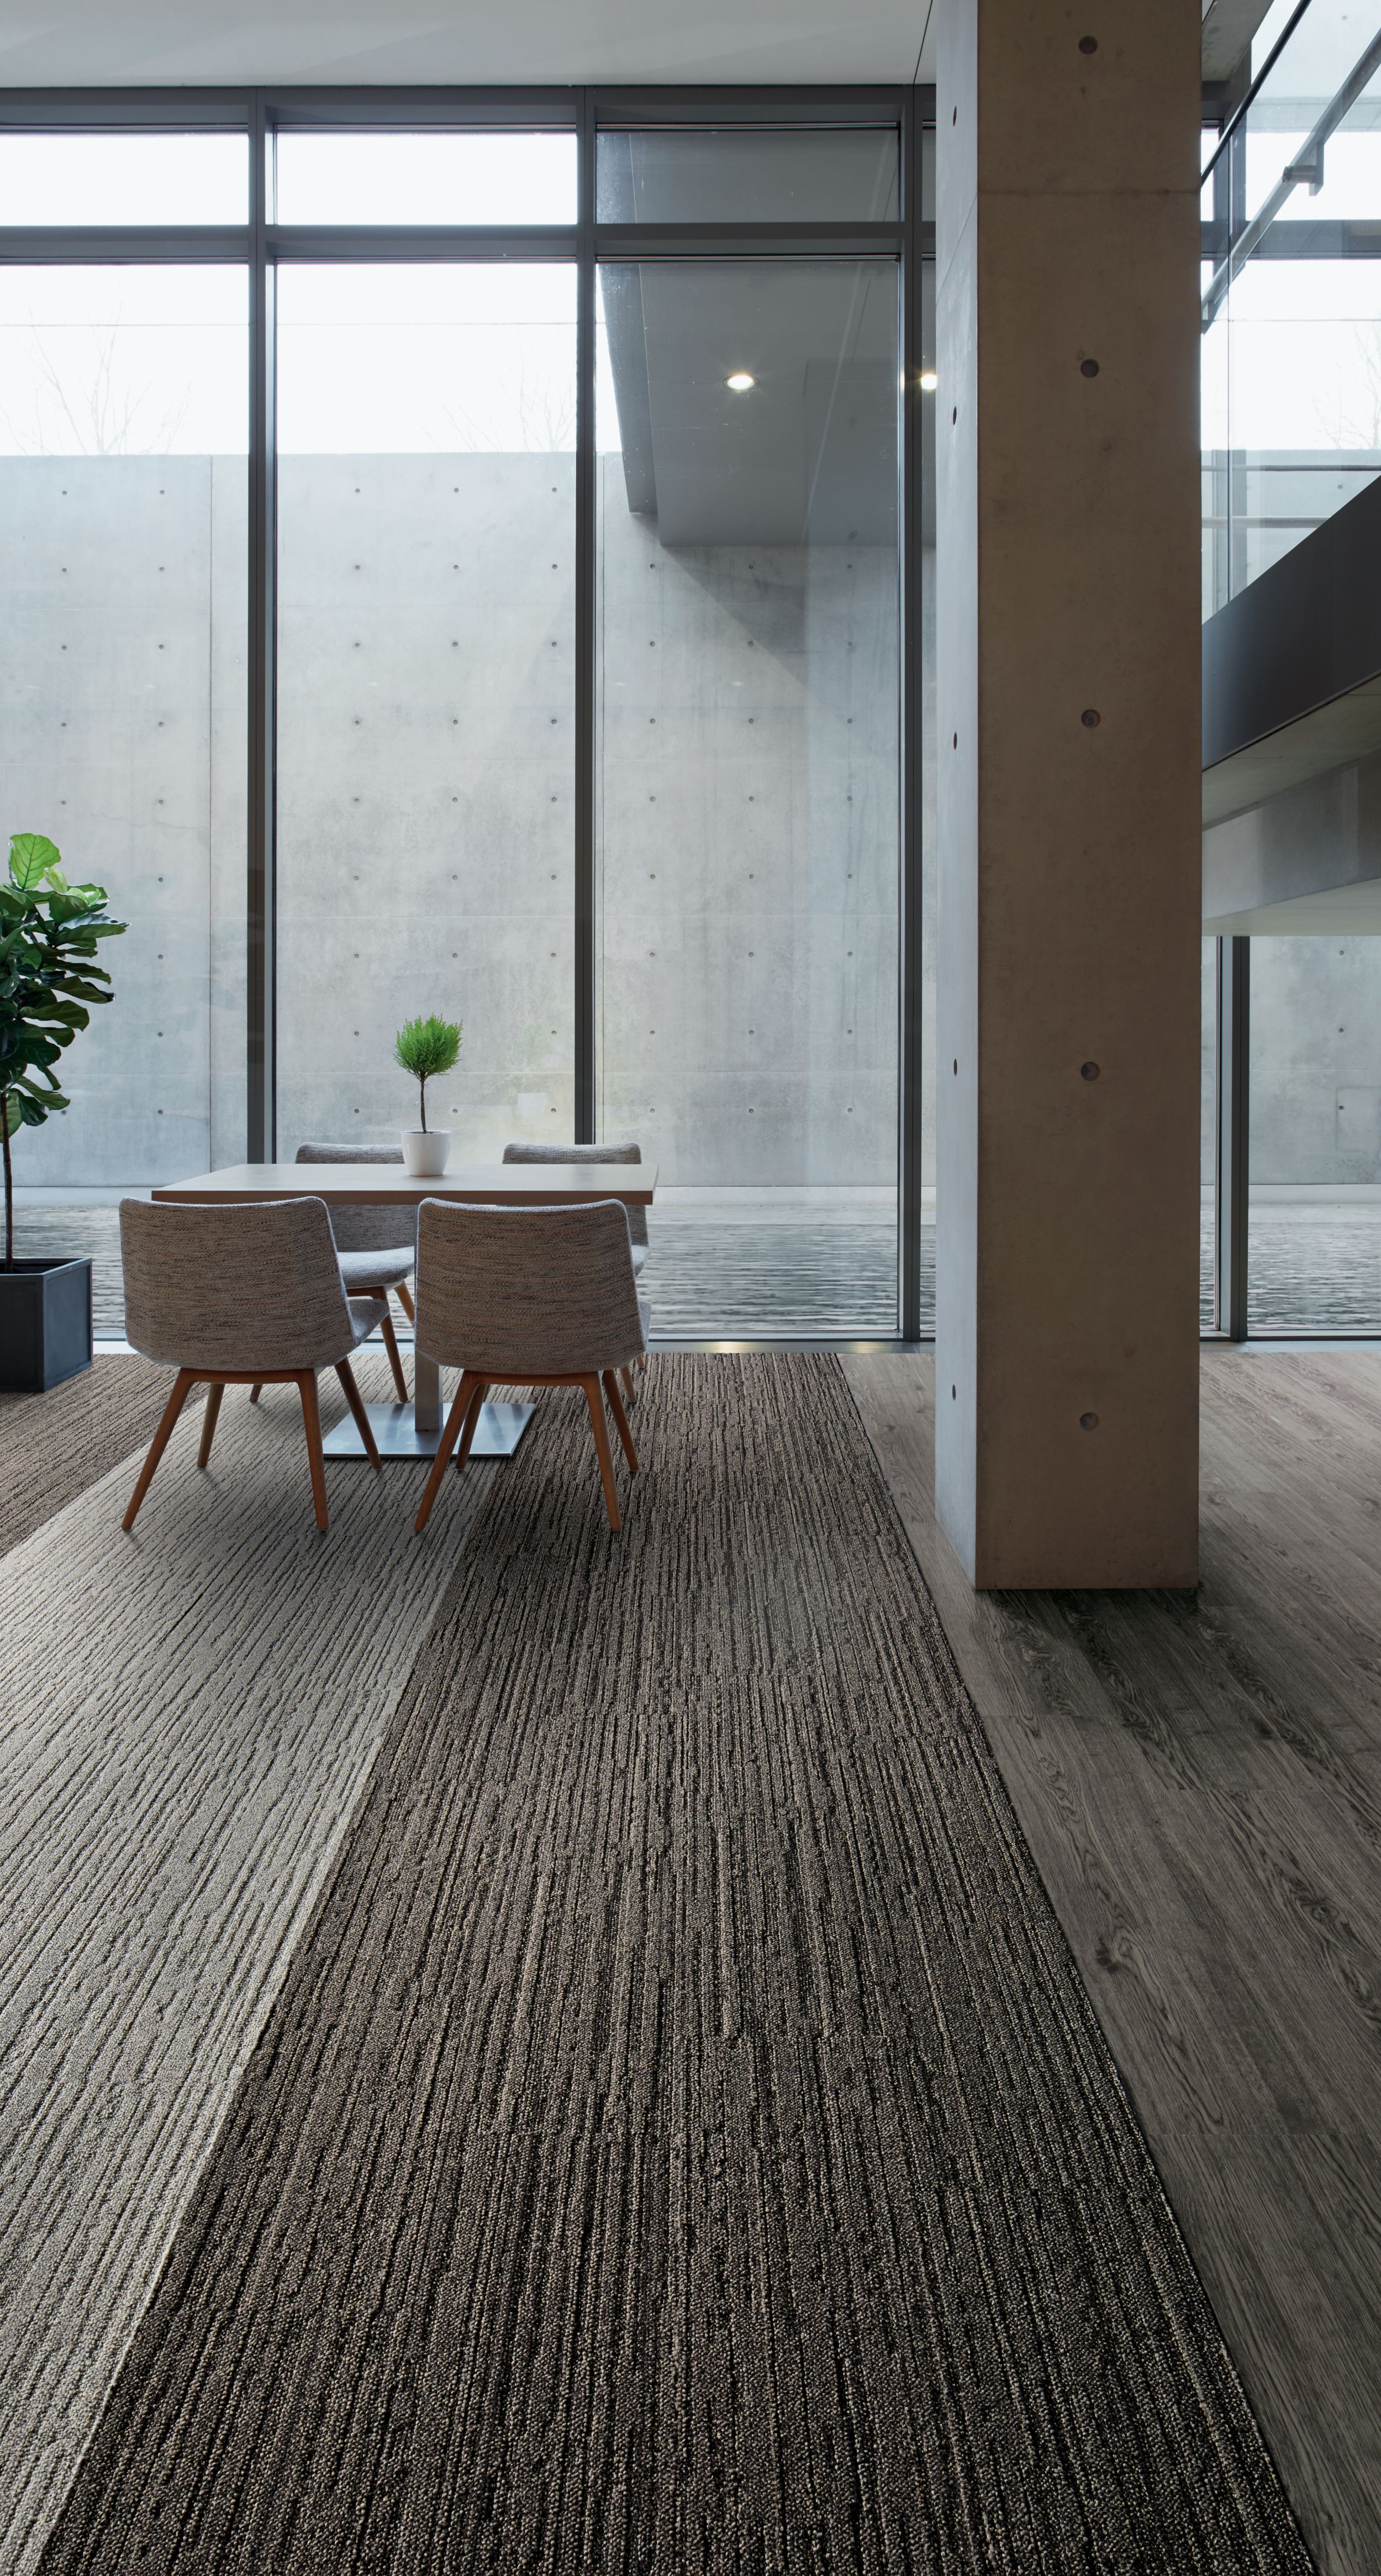 image Interface WW880 plank carpet tile and Natural Woodgrains LVT in office common area numéro 2